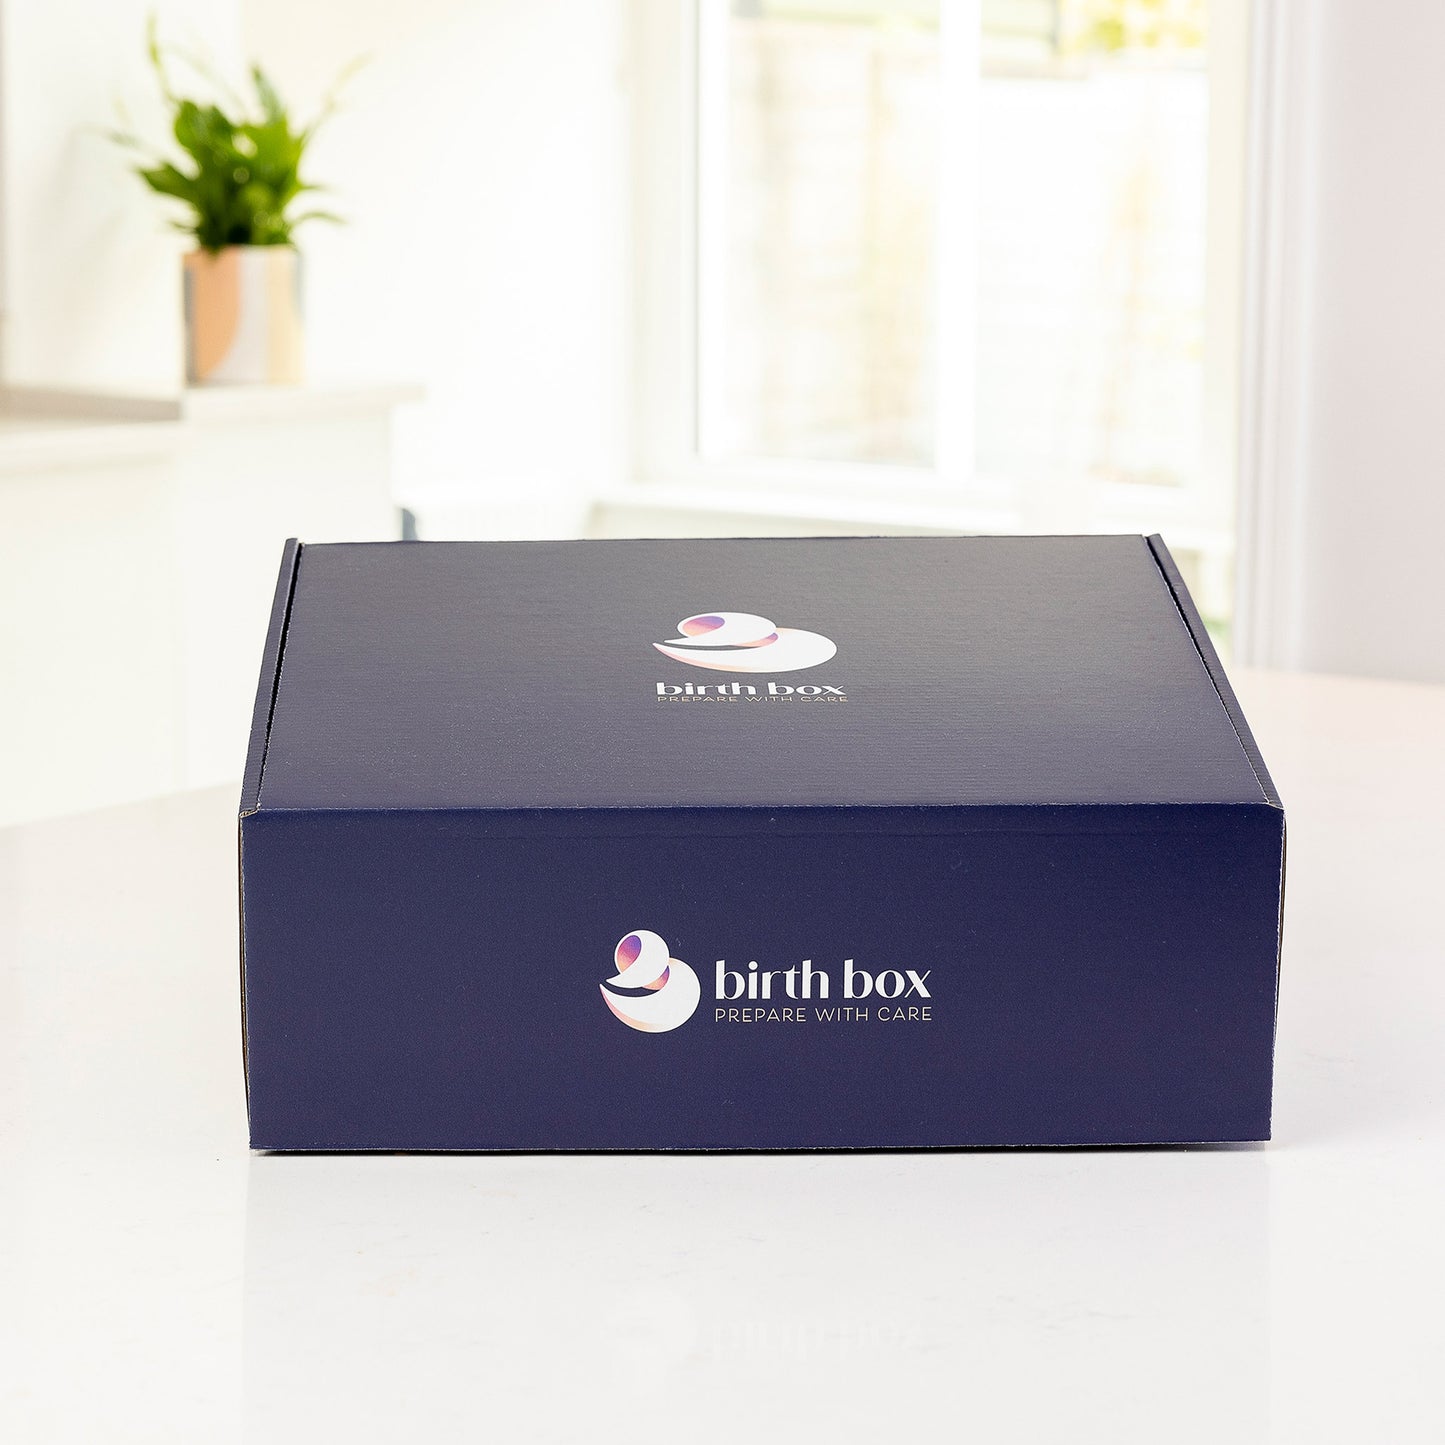 The Premium Birth Box